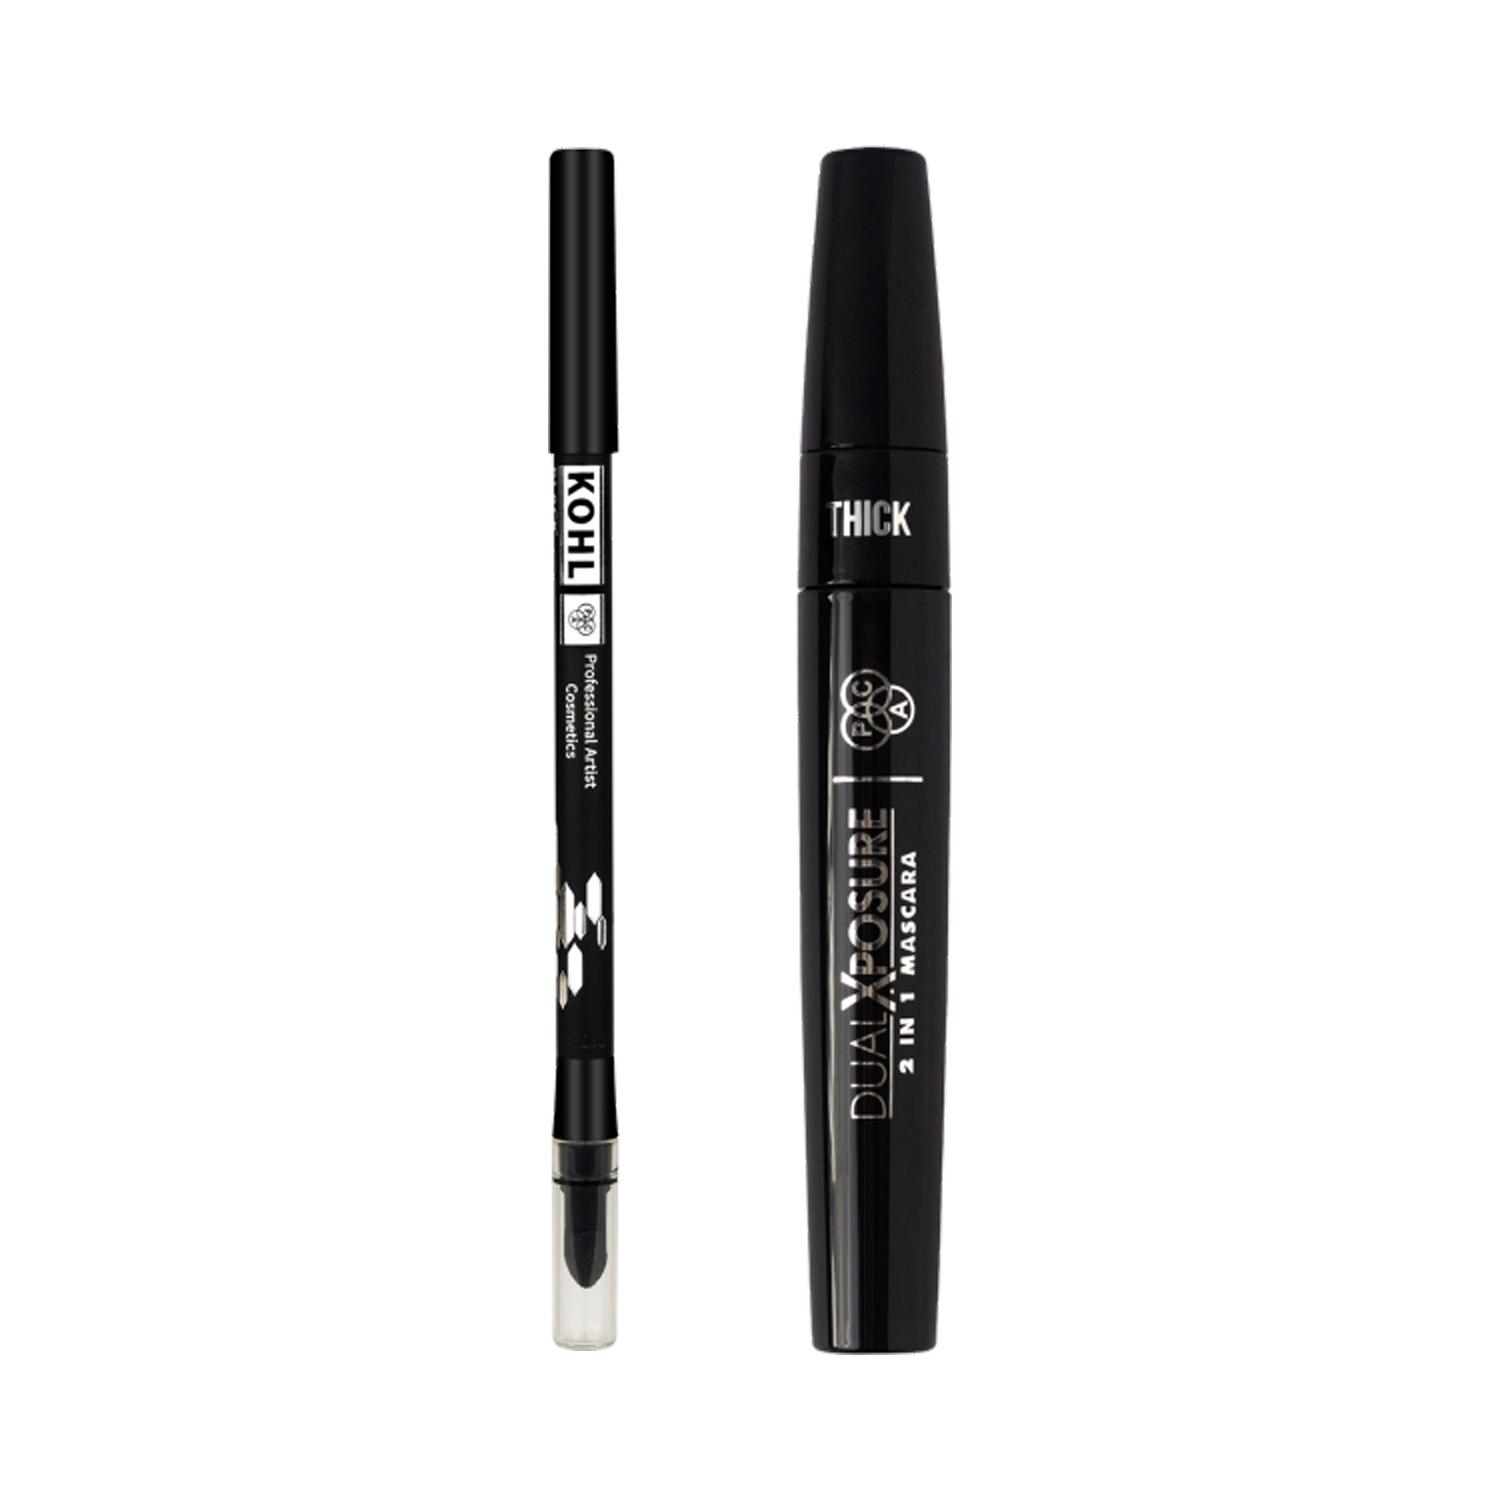 PAC | PAC Longlasting Kohl Pencil Black & Dual Xposure Mascara Black Combo